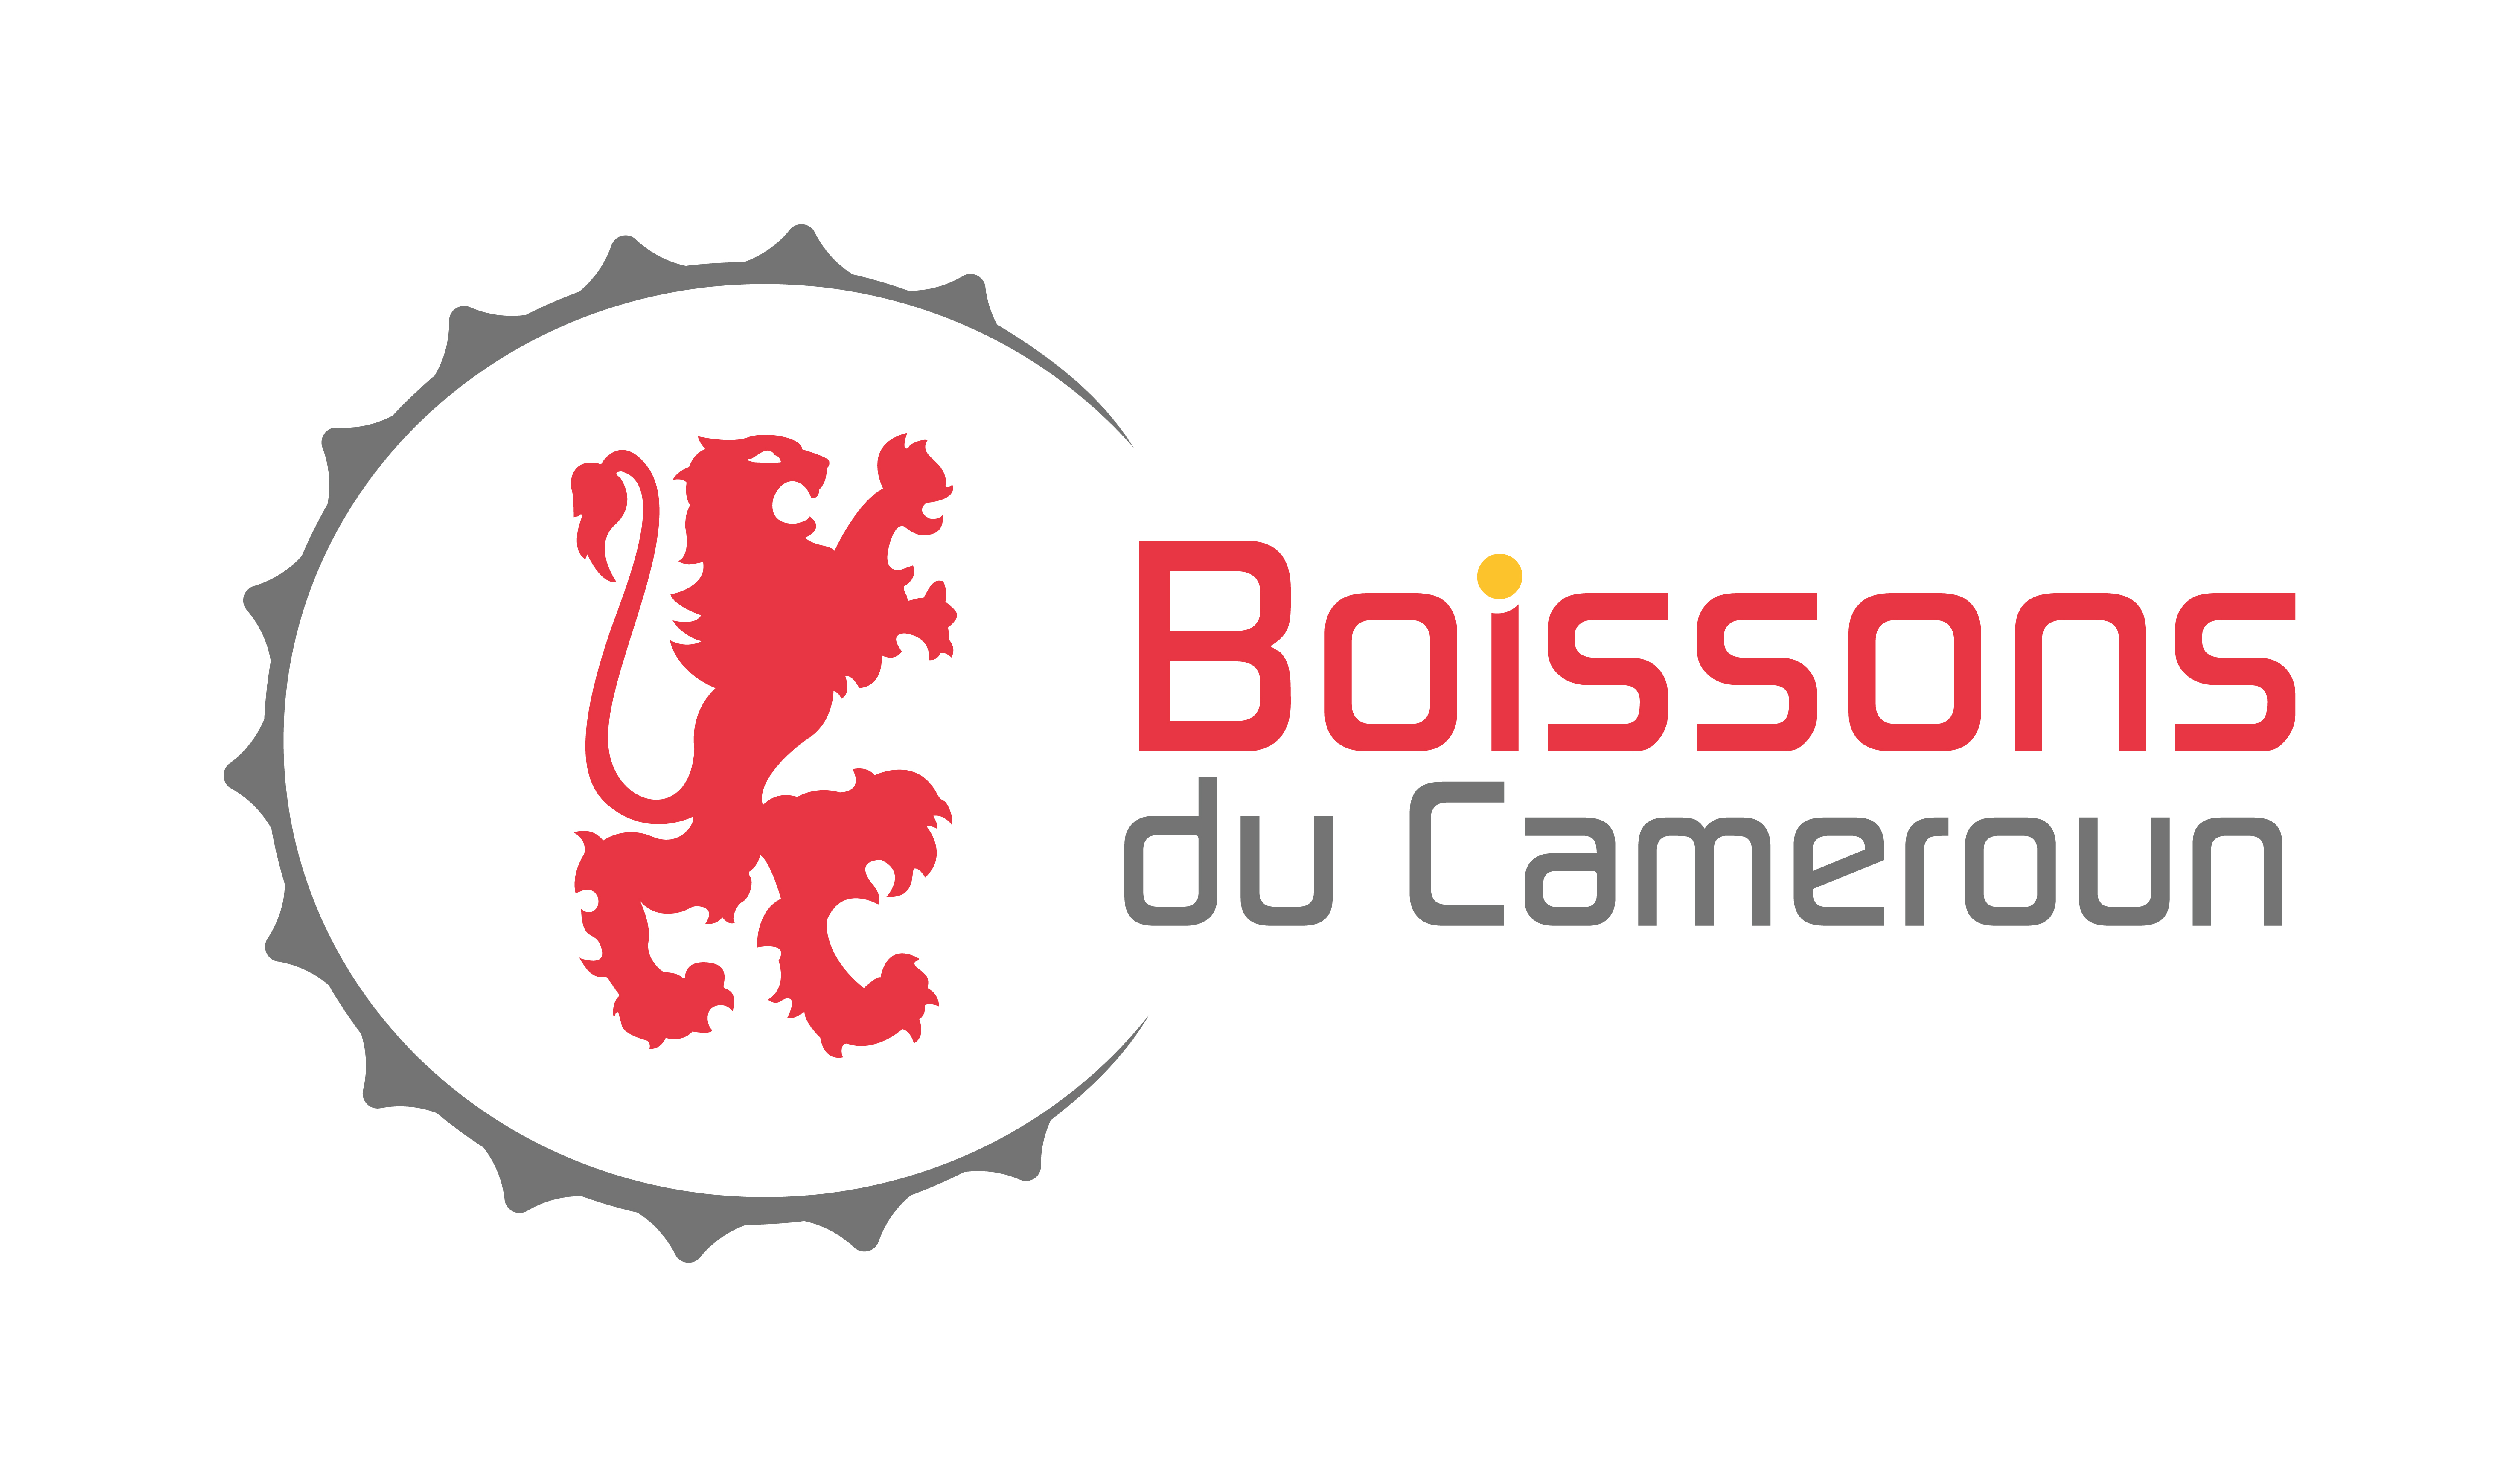 Les Brasseries du Cameroun logo